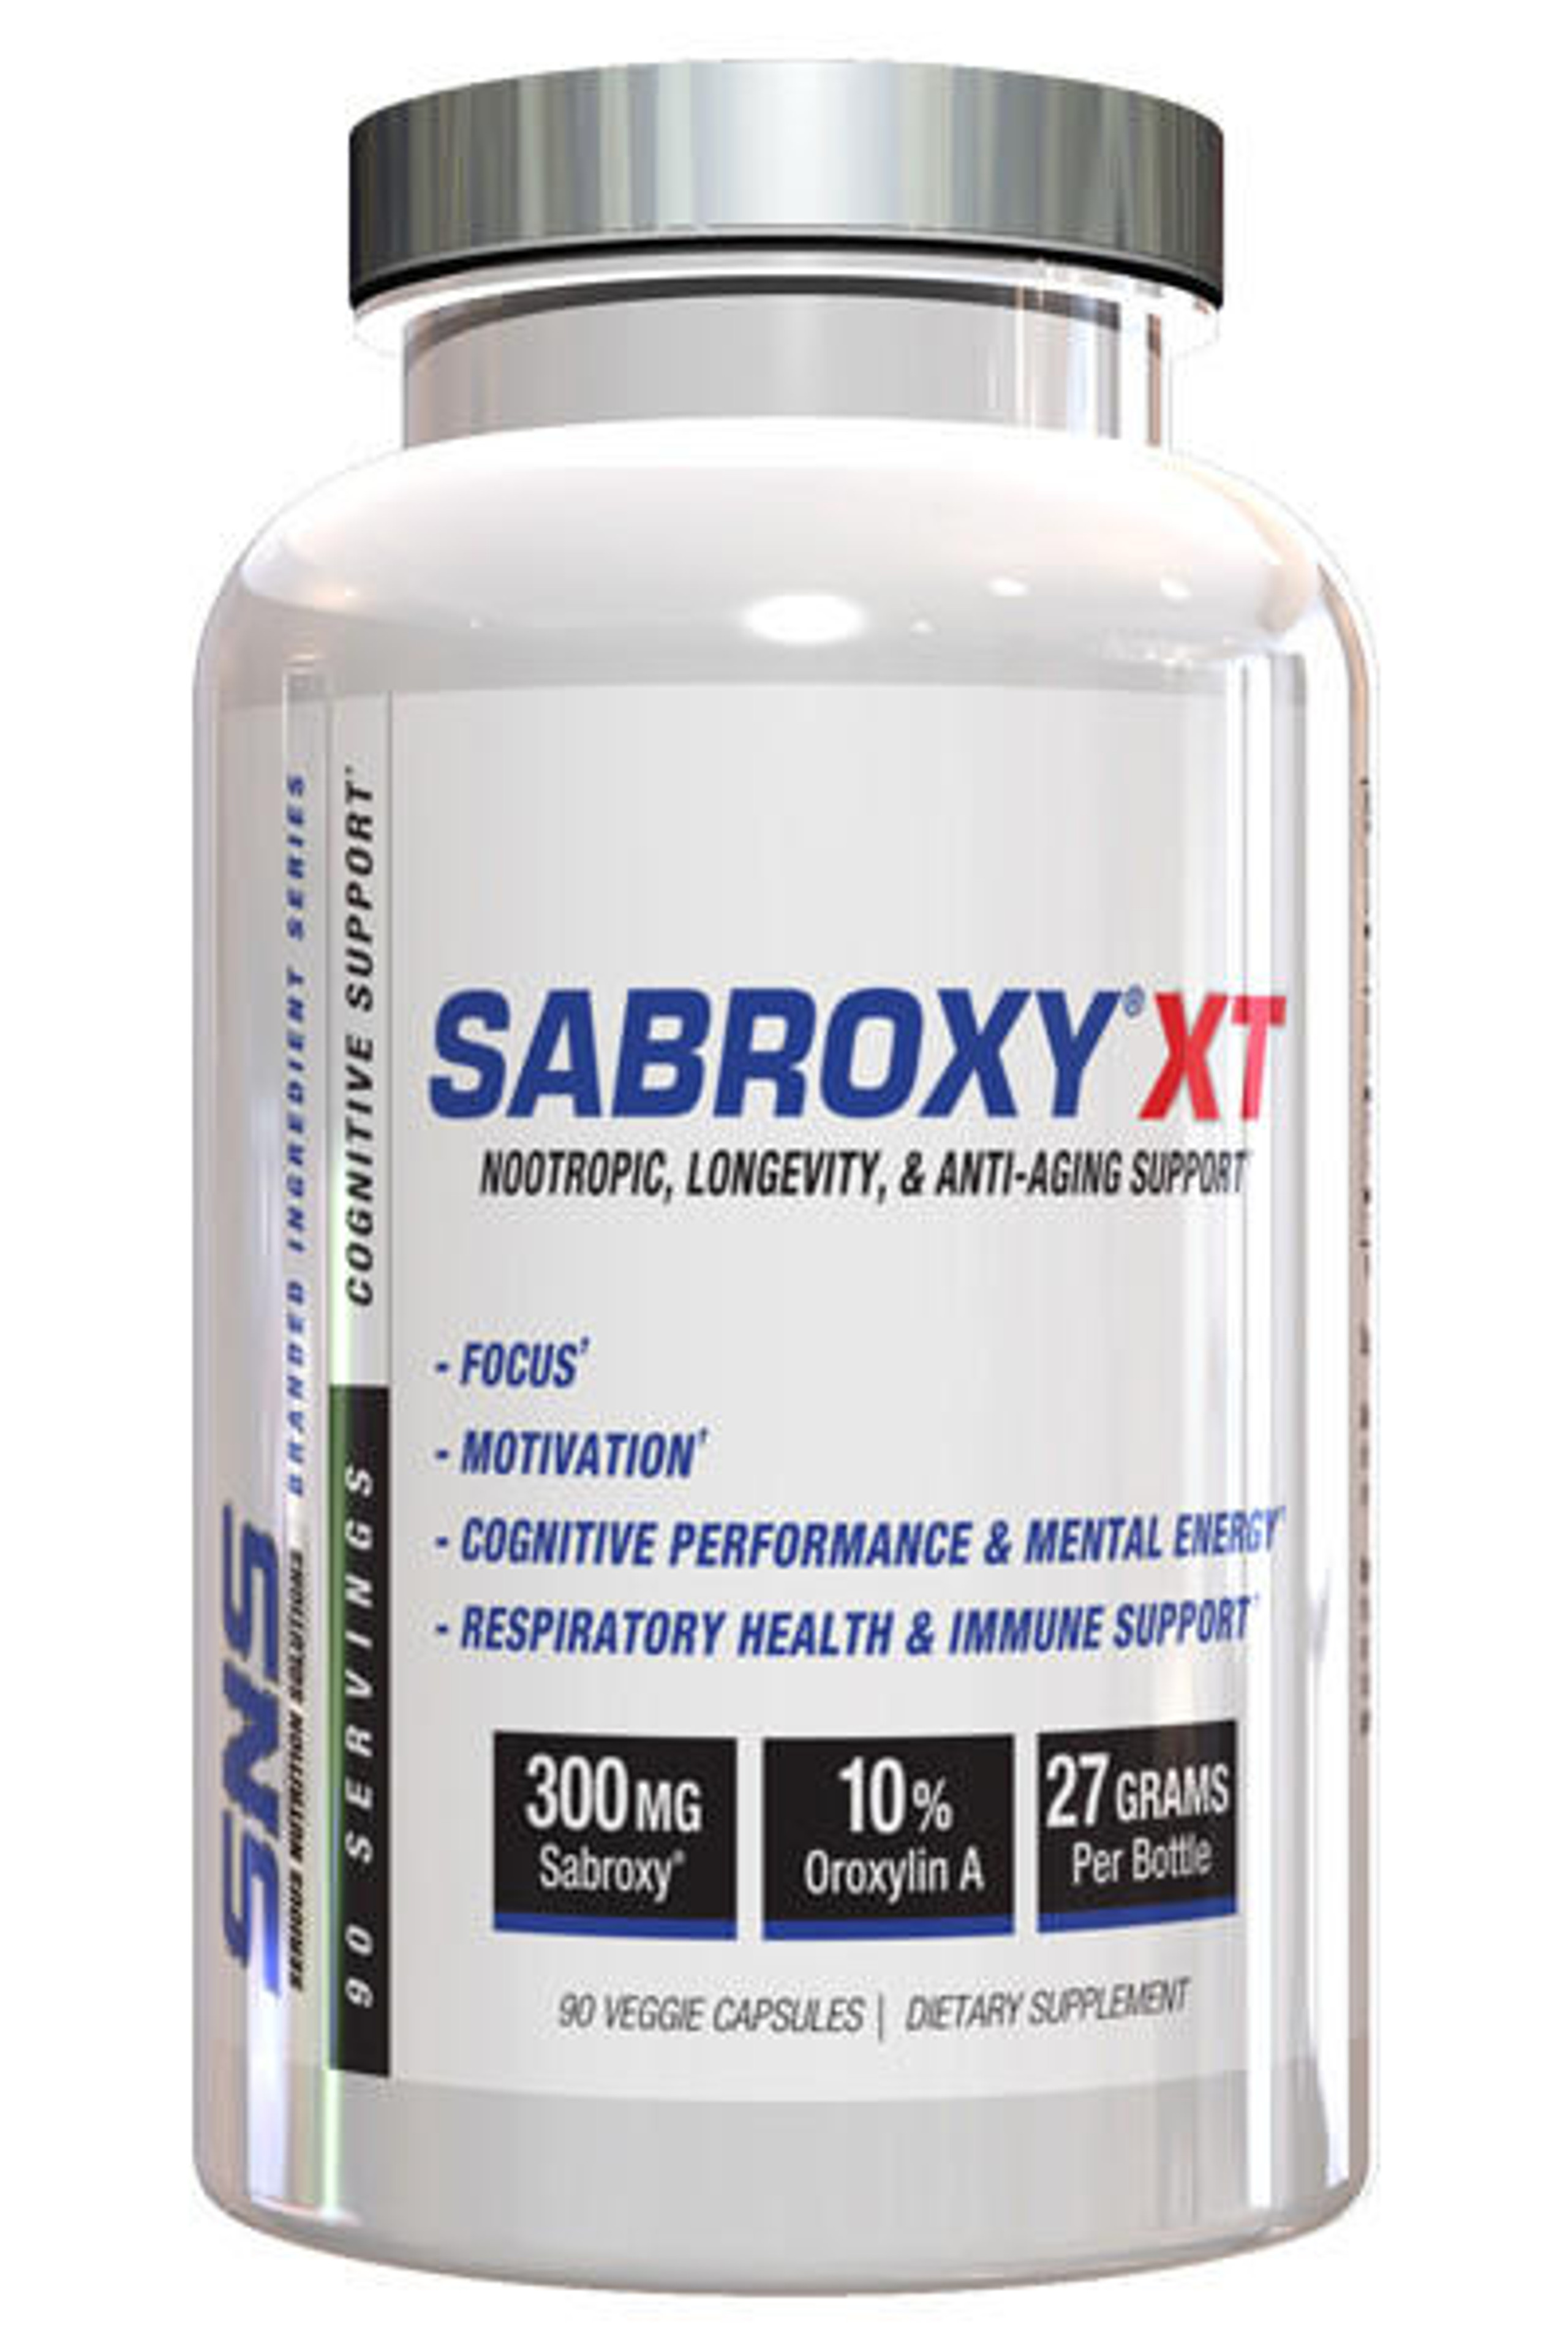 Sabroxy XT by SNS